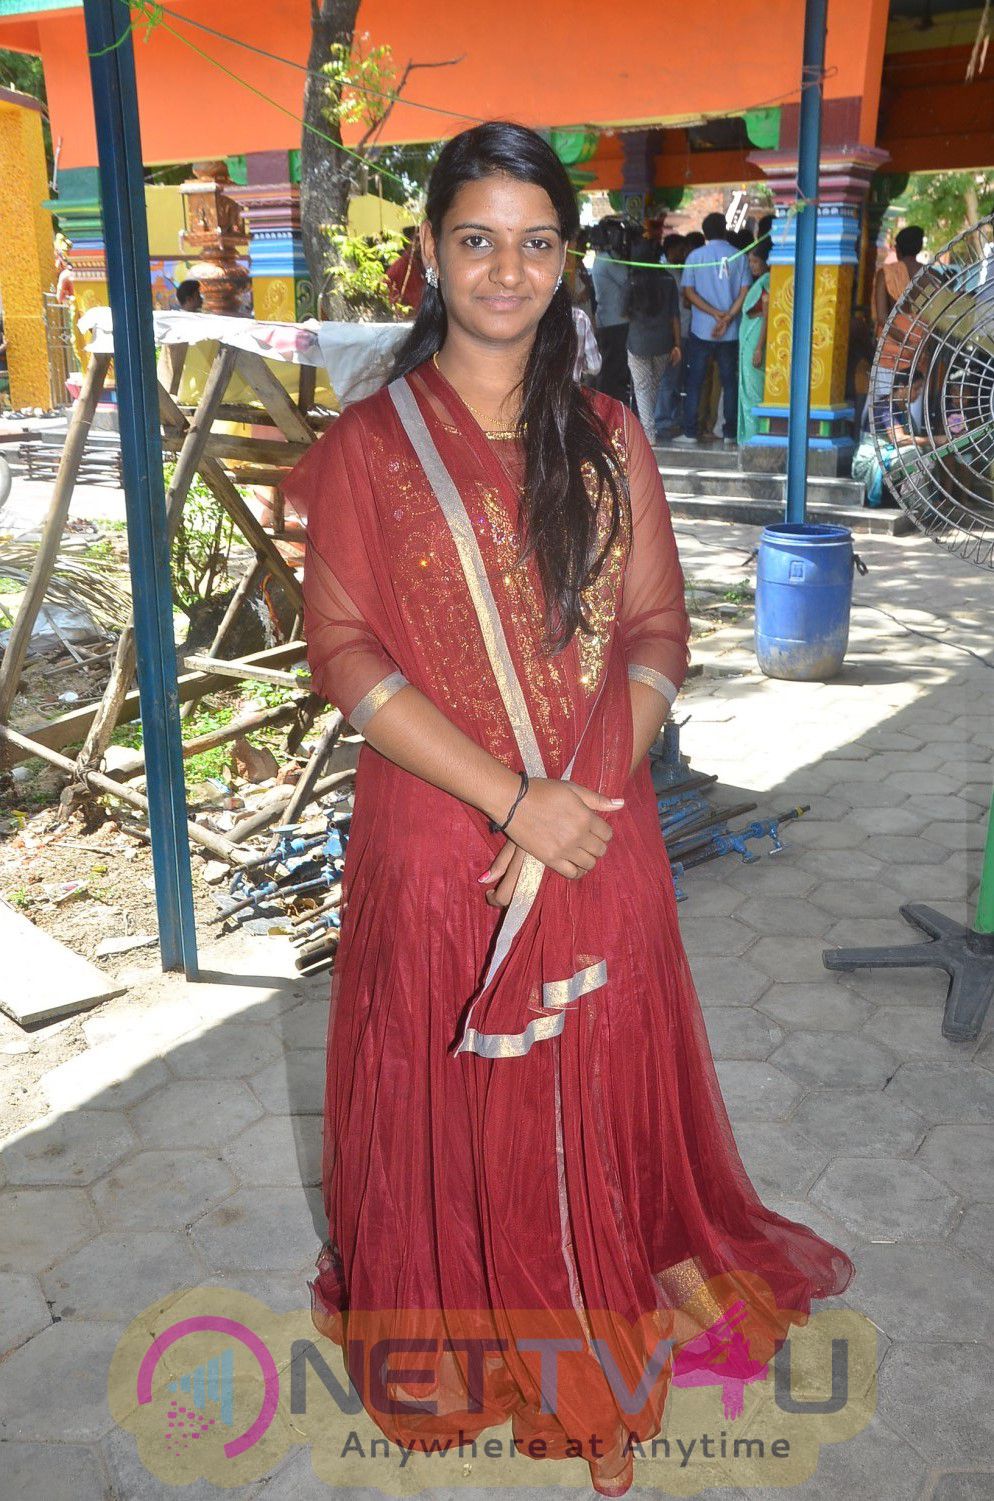 Homely Indian Girls November 2012